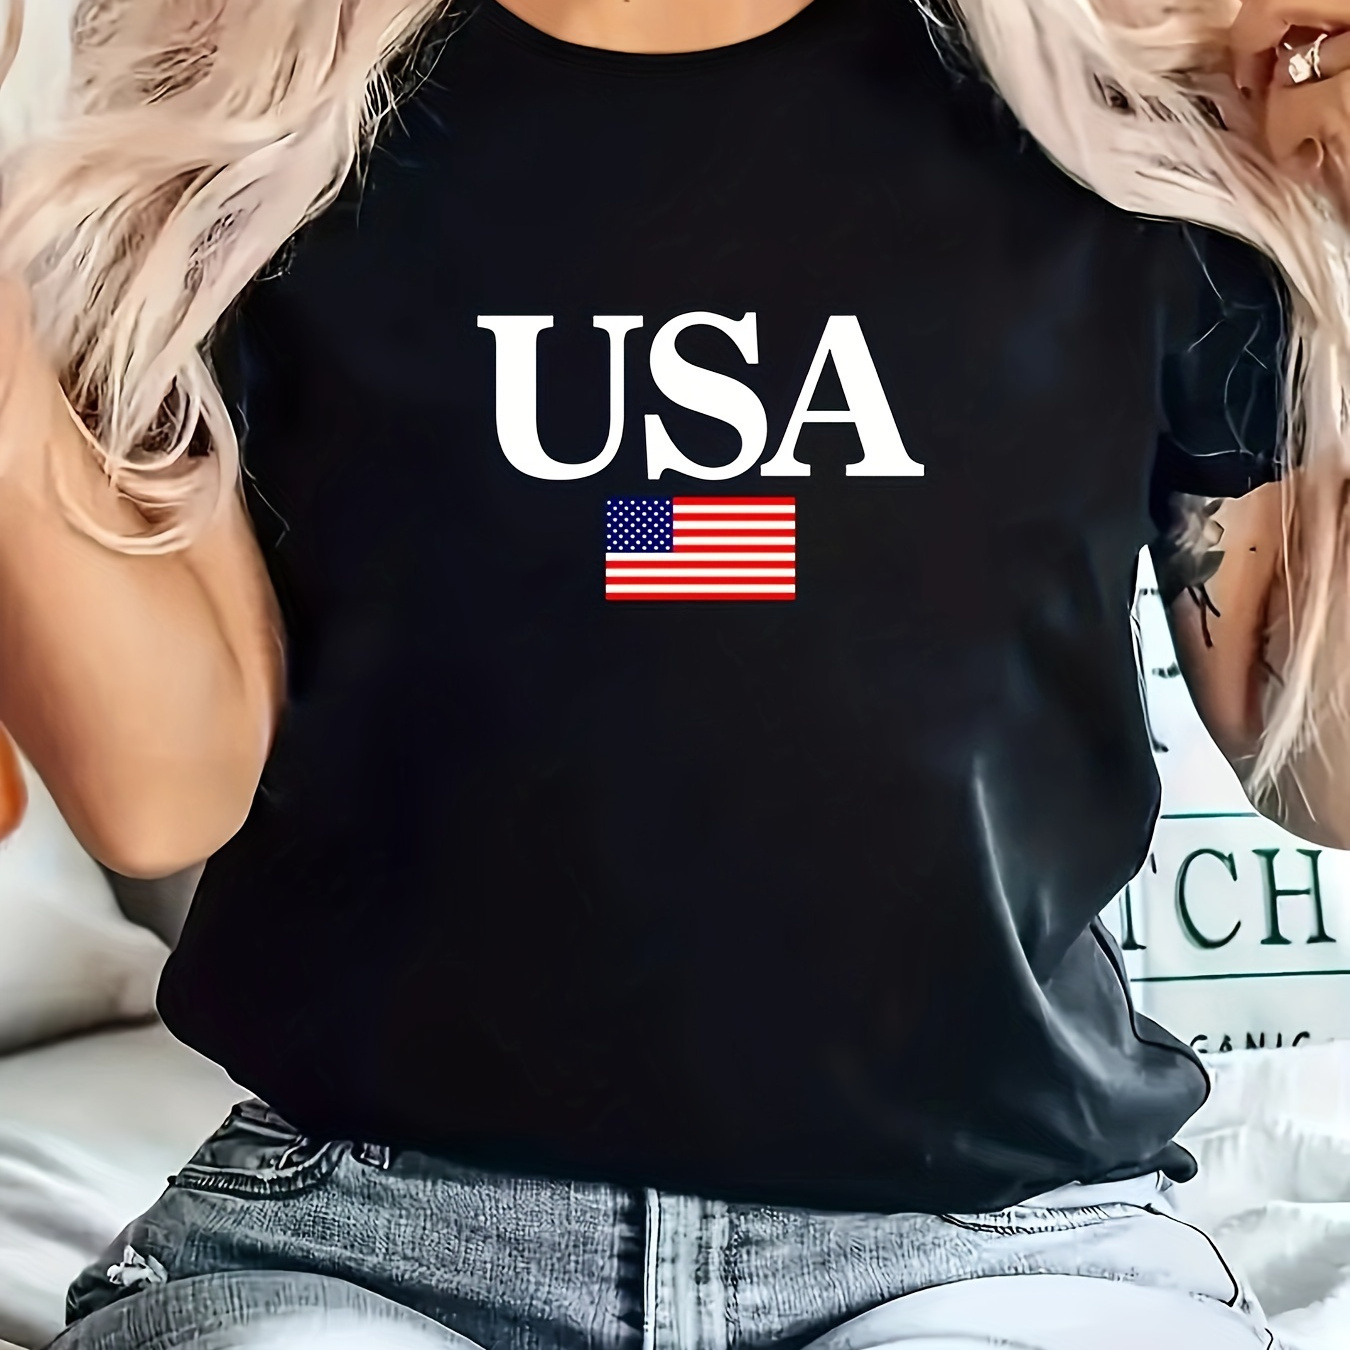 

Usa Flag Print Round Neck T-shirt, Fashion Casual Stretch Short Sleeve Sport T-shirt, Women's Clothing